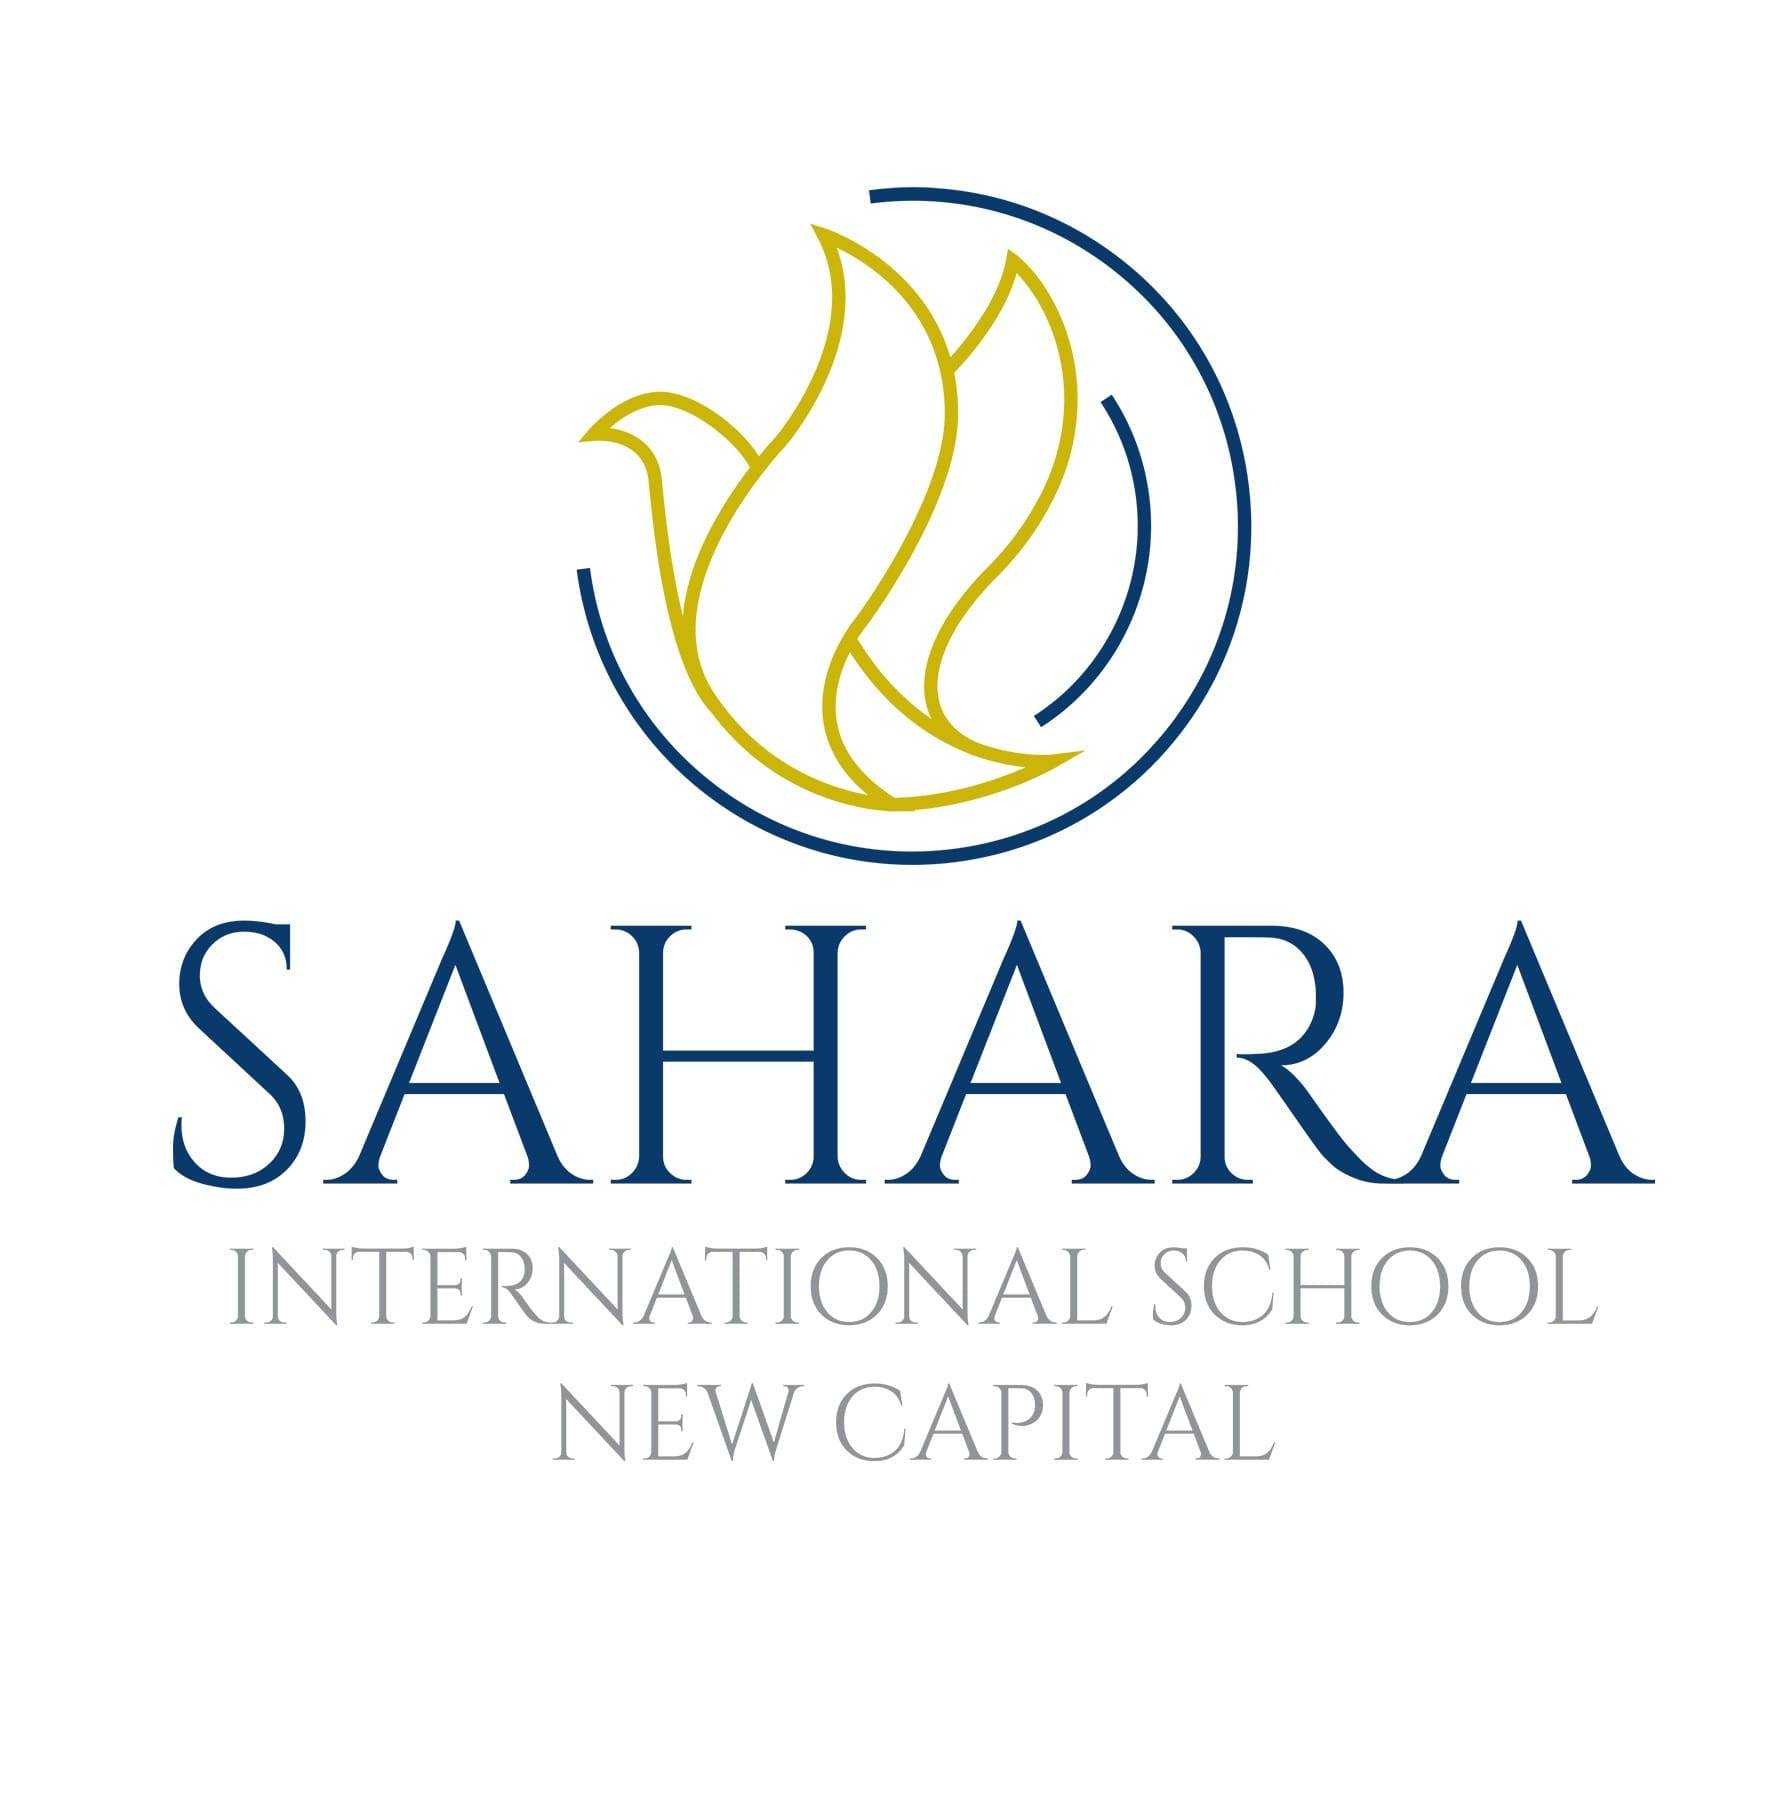 Sahara International School New Capital